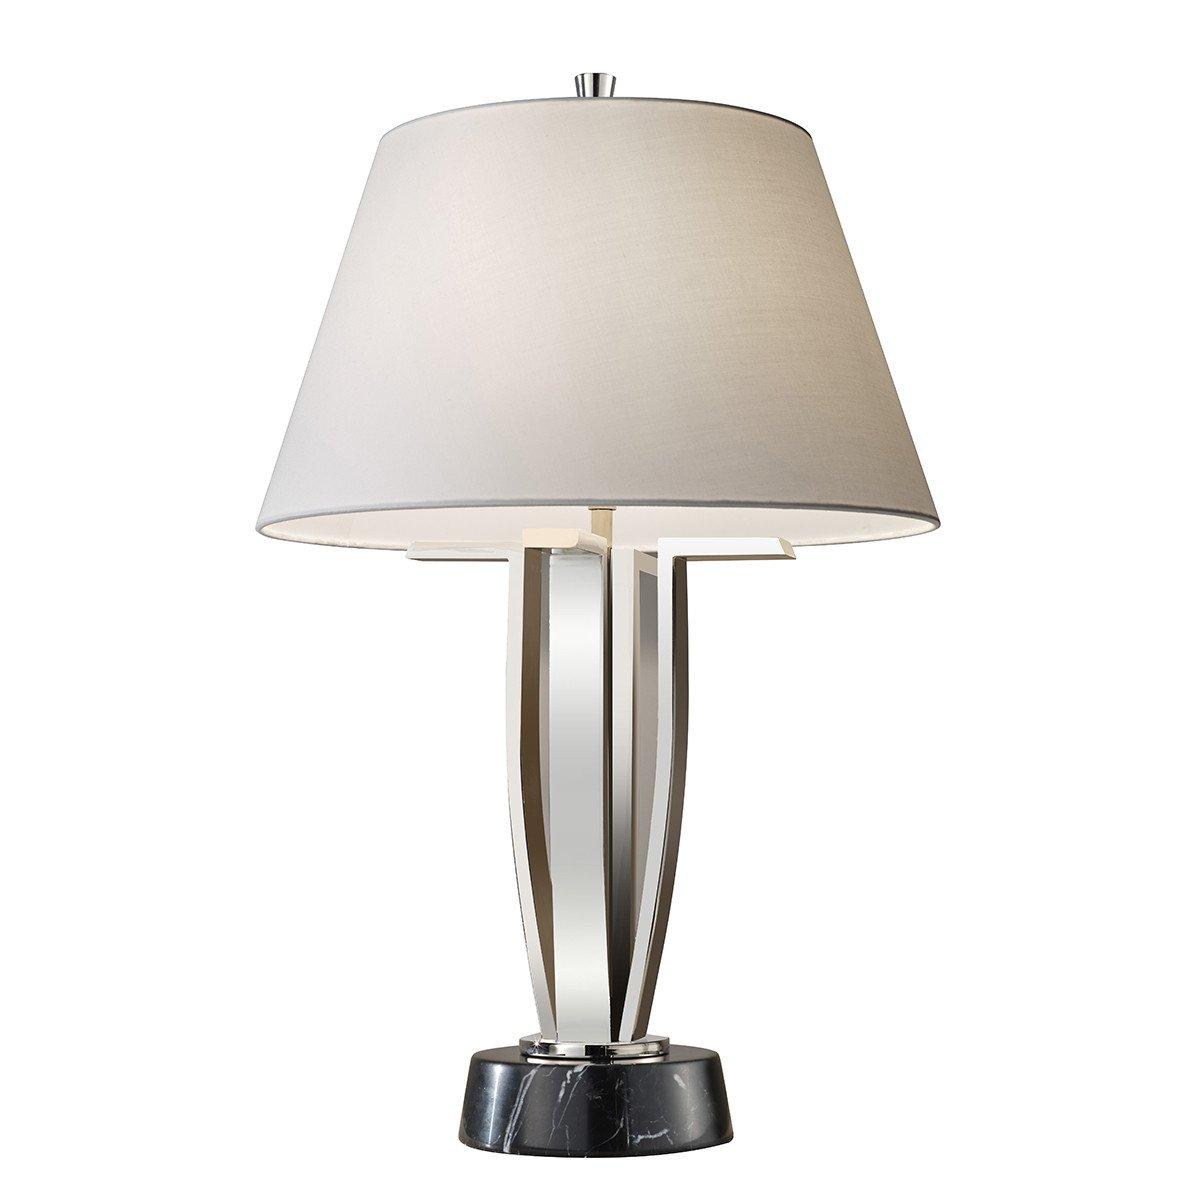 Silvershore 1 Light Table Lamp Polished Nickel E27